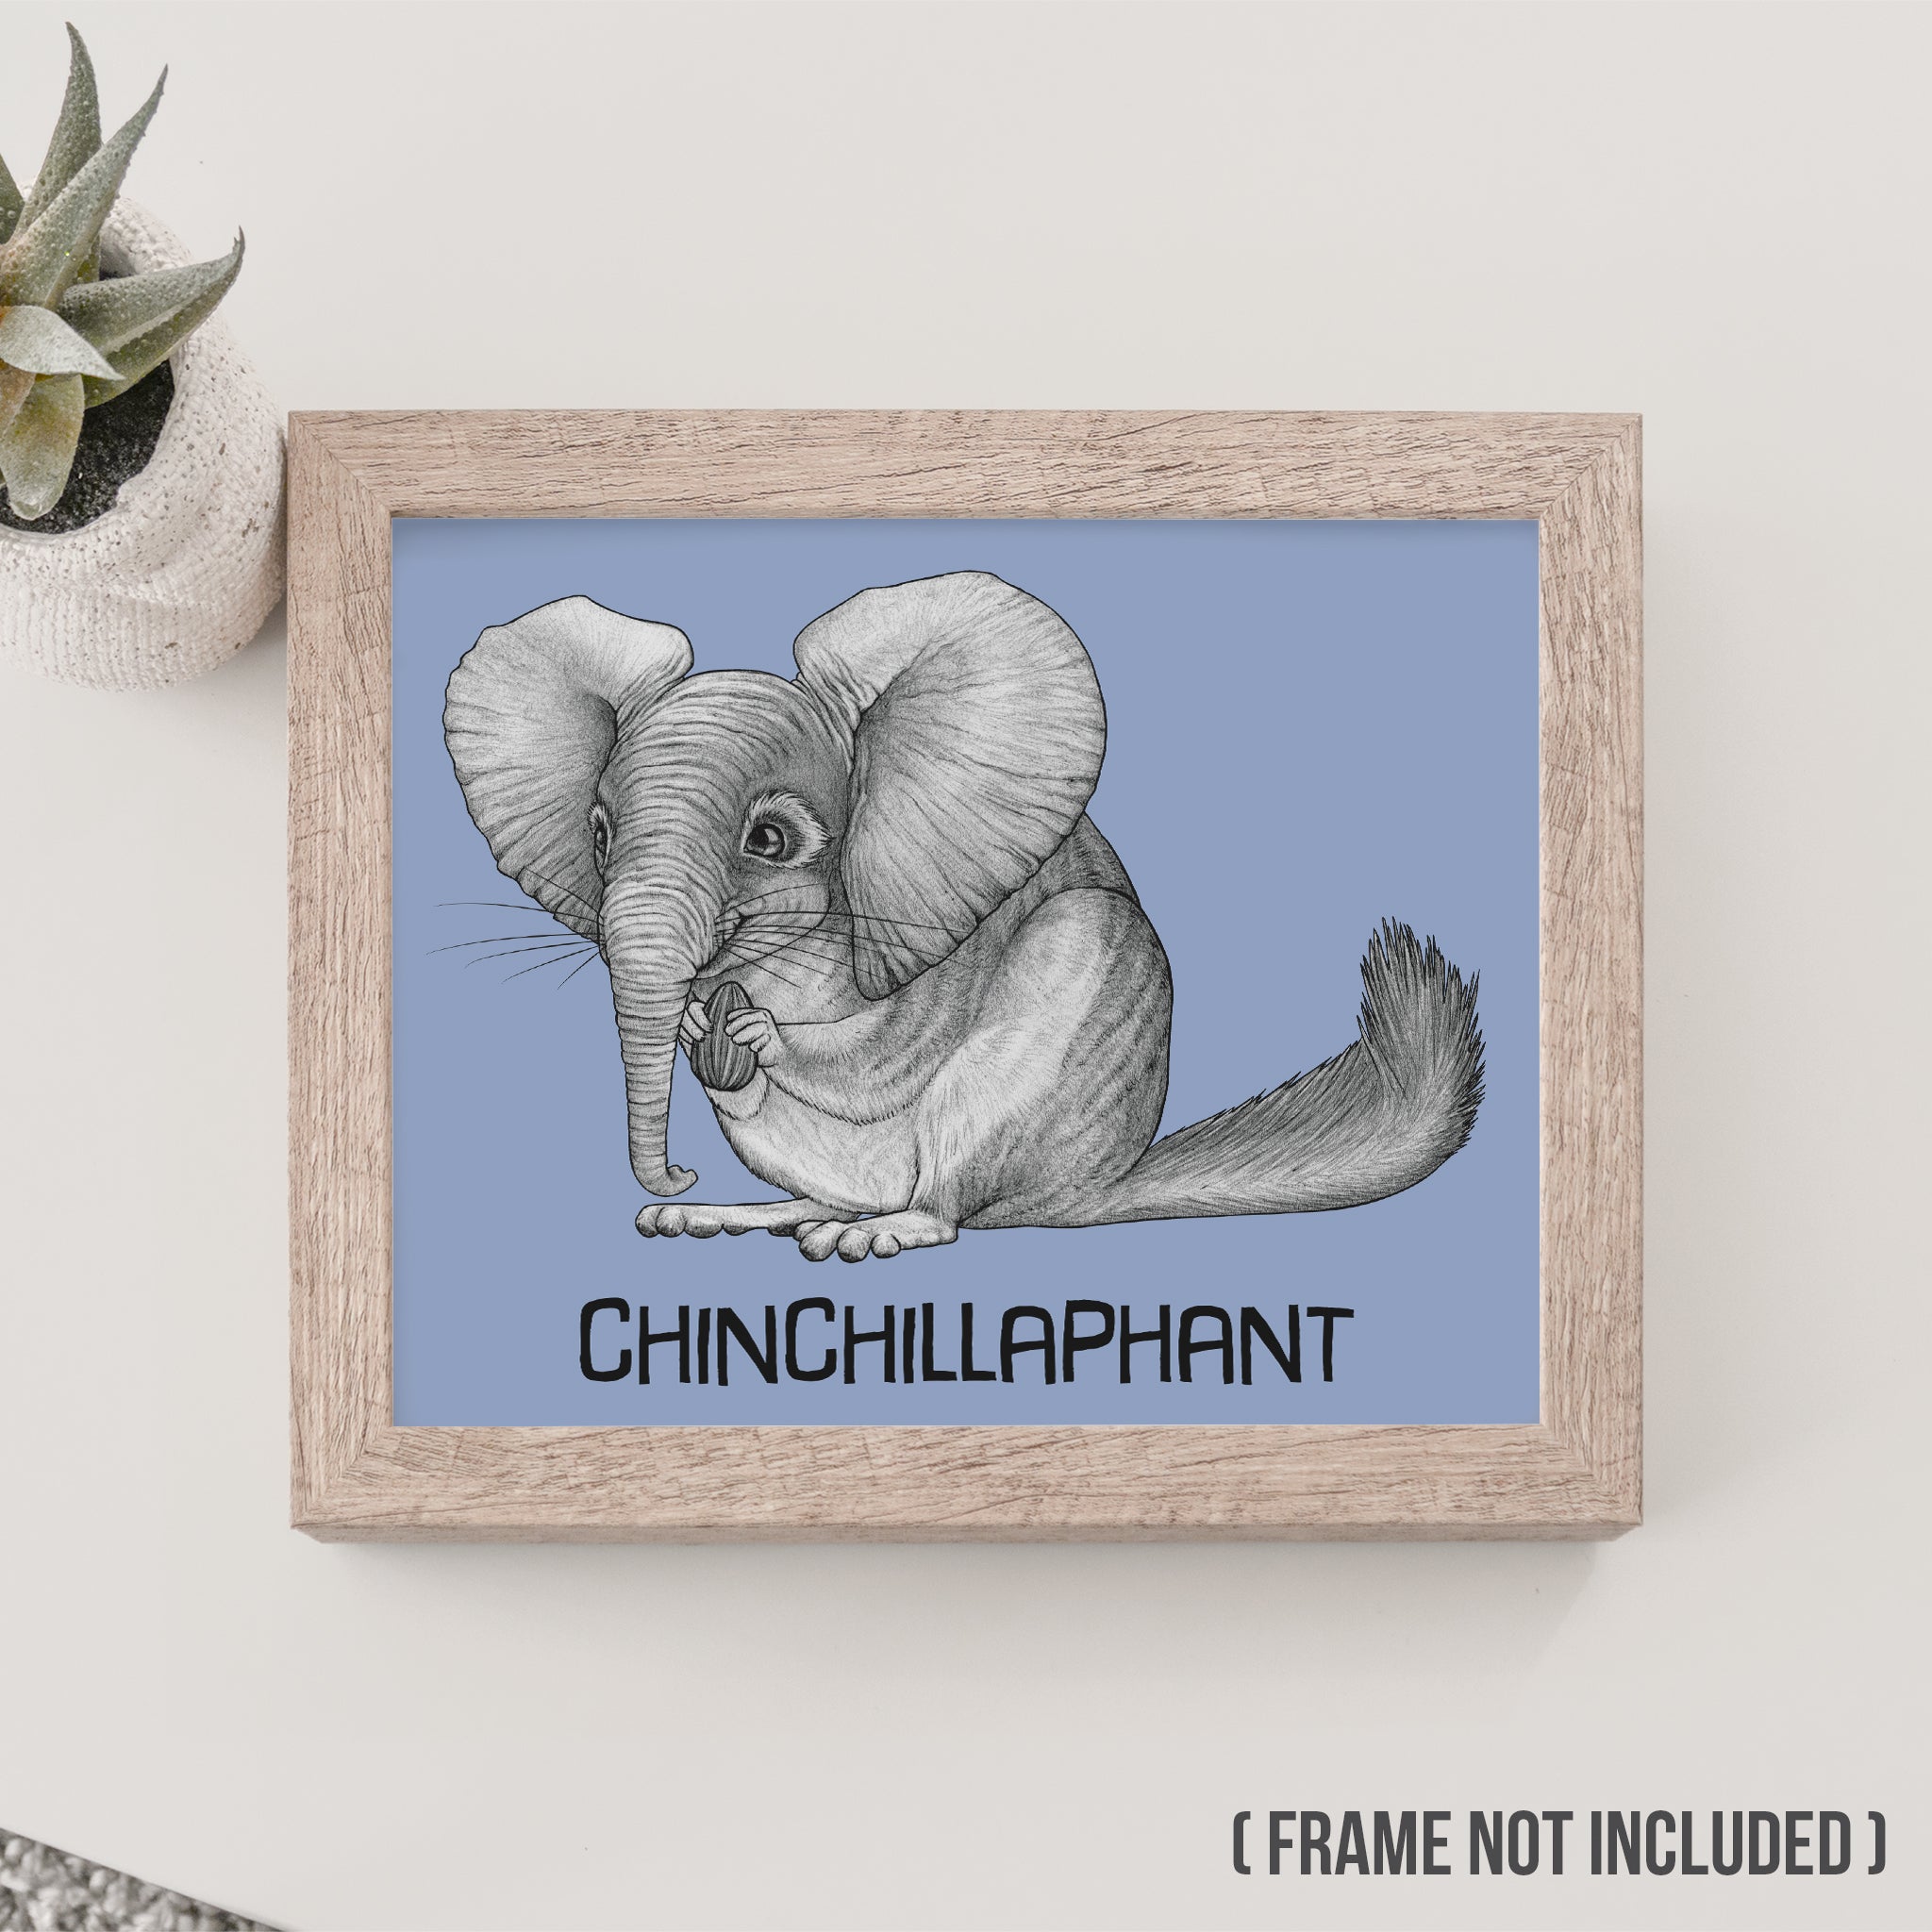 Chinchillaphant 8x10" Art Print